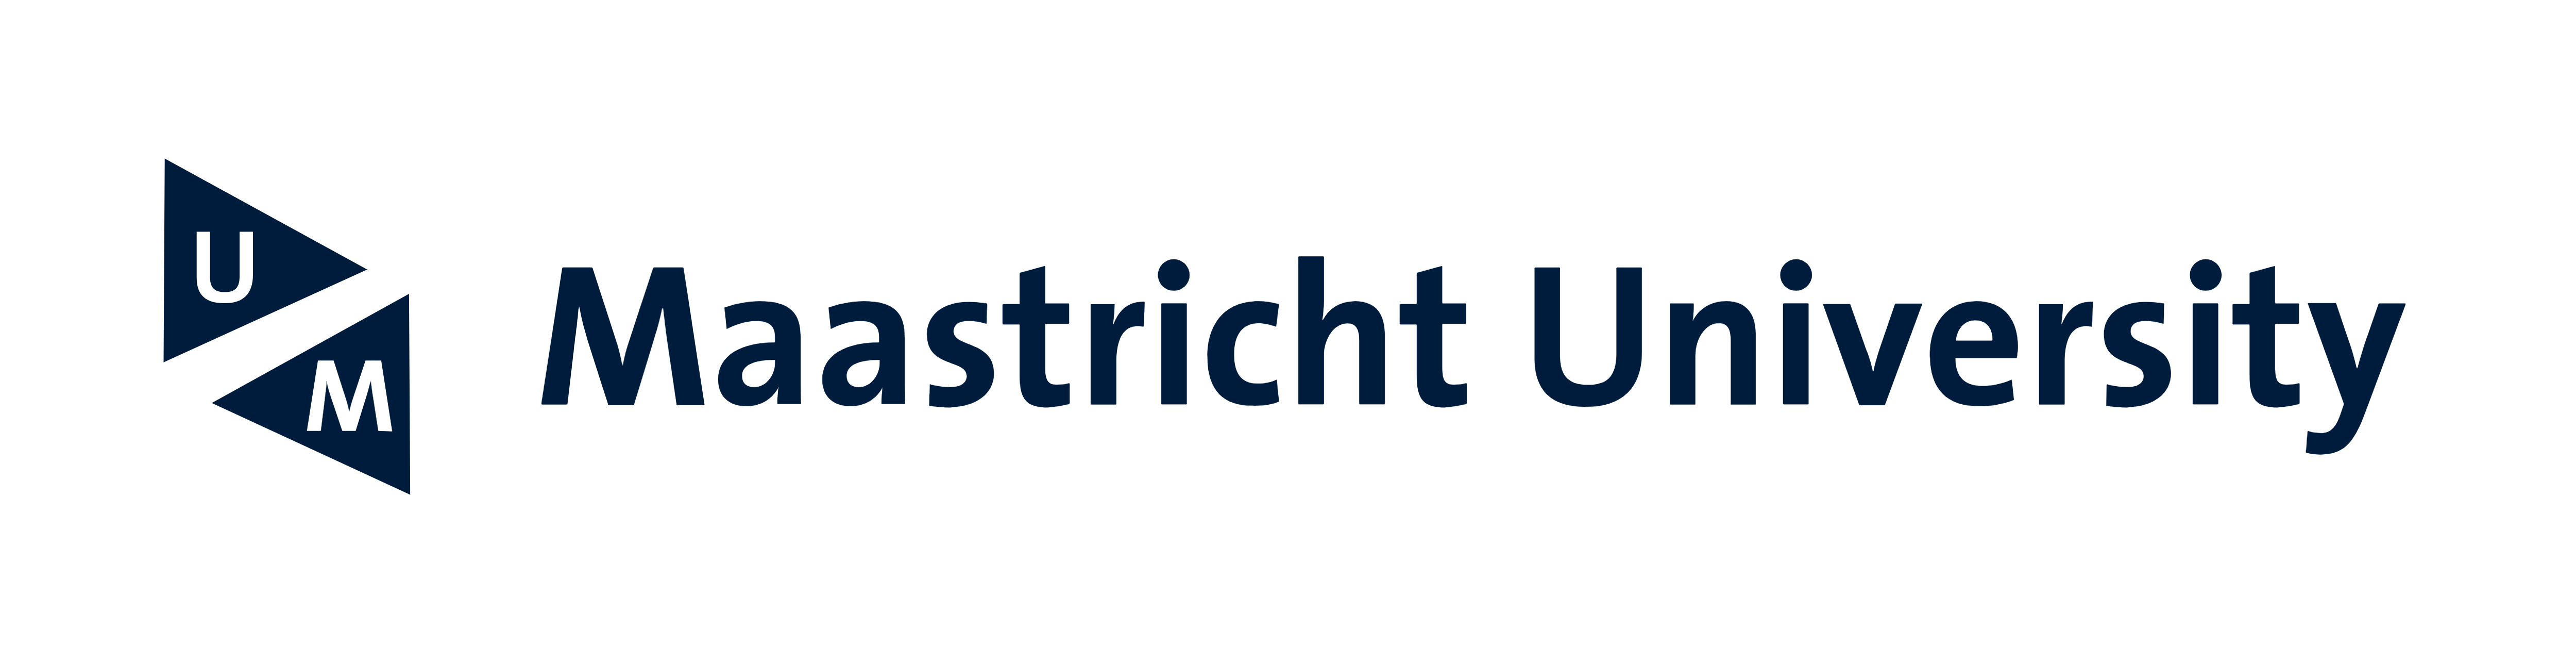 Maastricht University Cstories.nl Business Storytelling